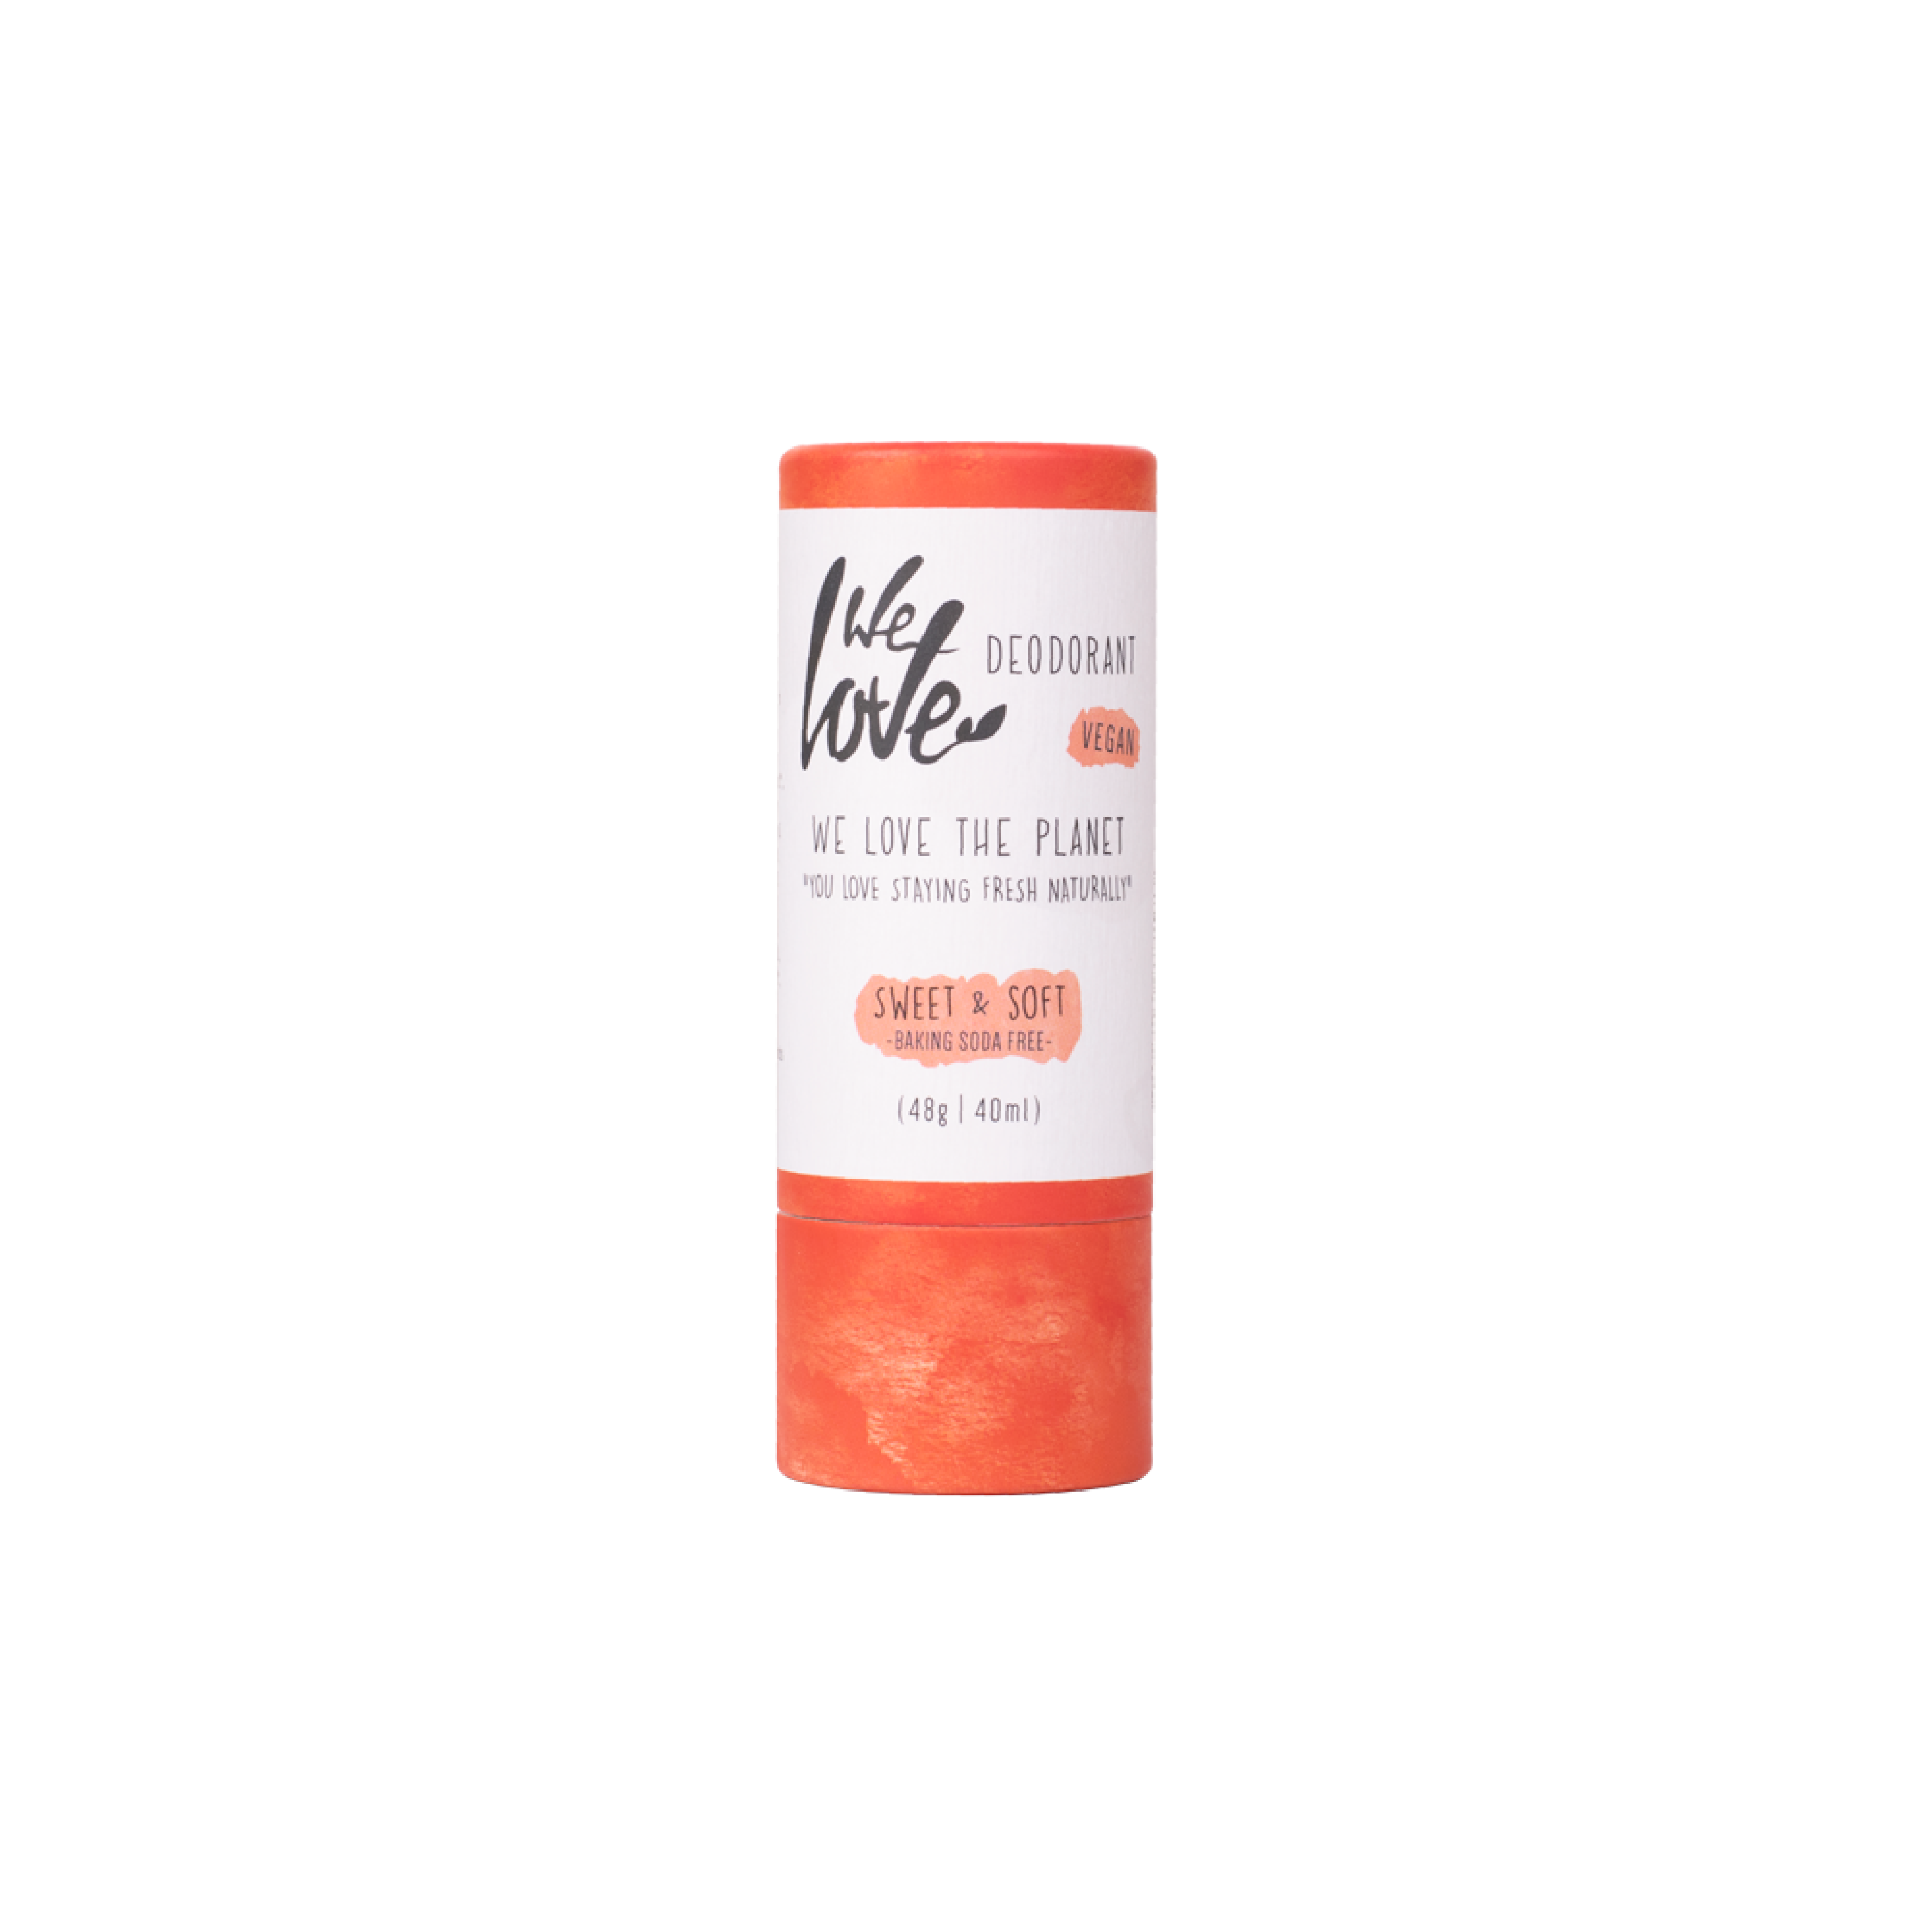 Natuurlijke deodorant stick – Sweet & Soft (vegan)